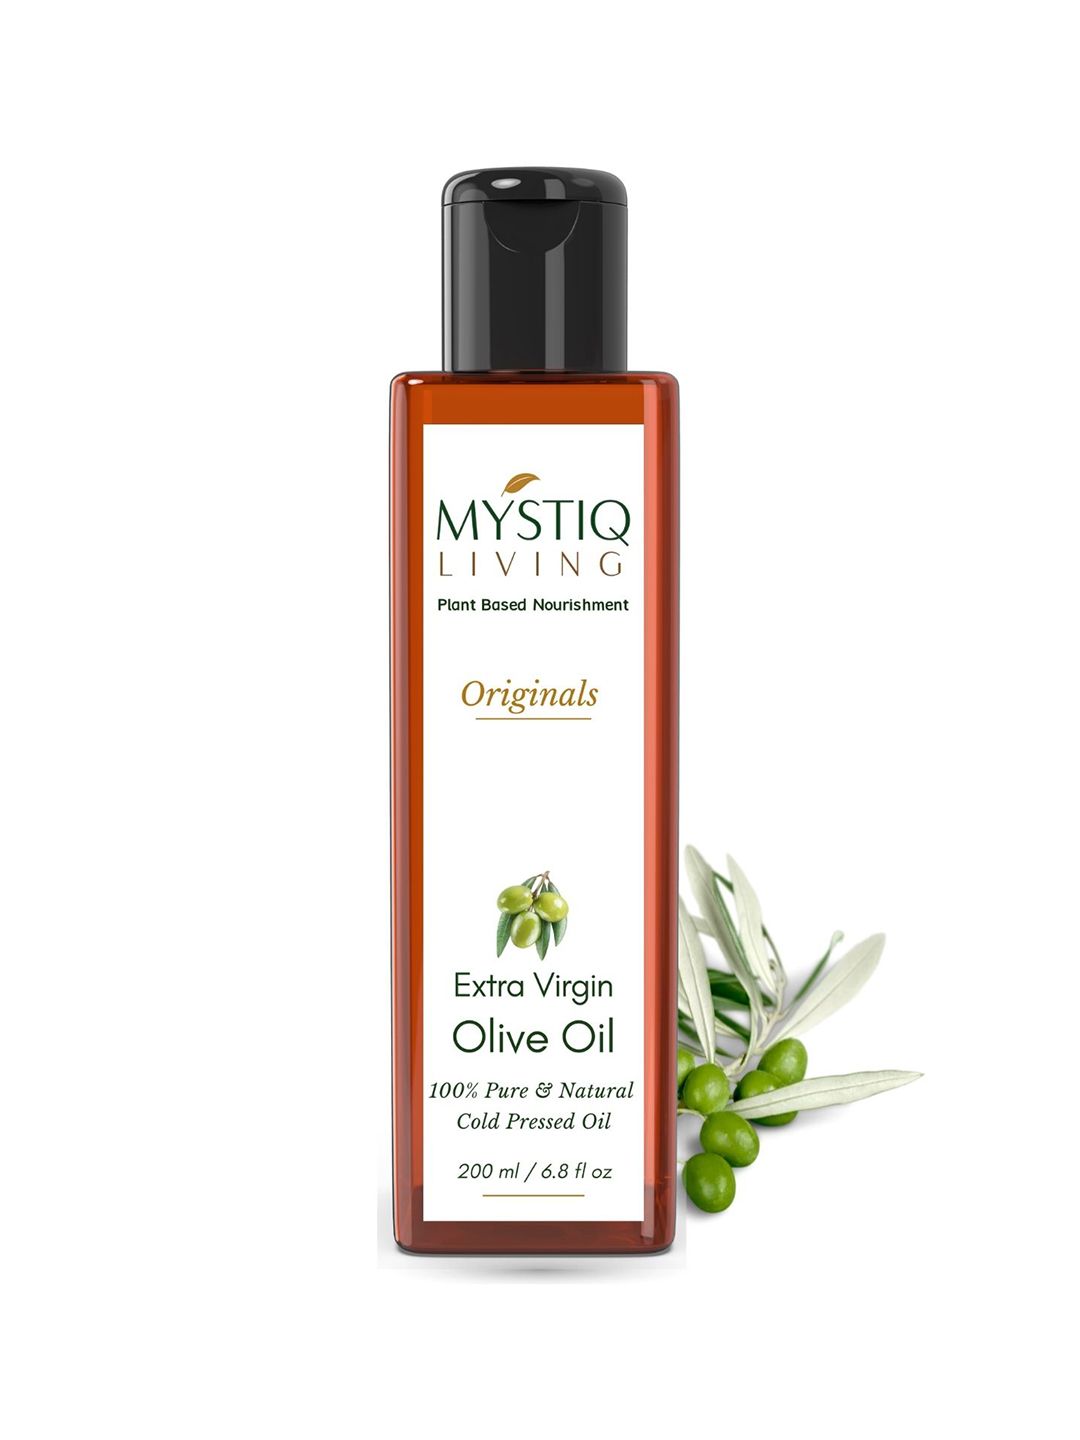 MYSTIQ LIVING Extra Virgin Olive Oil 200ml Price in India